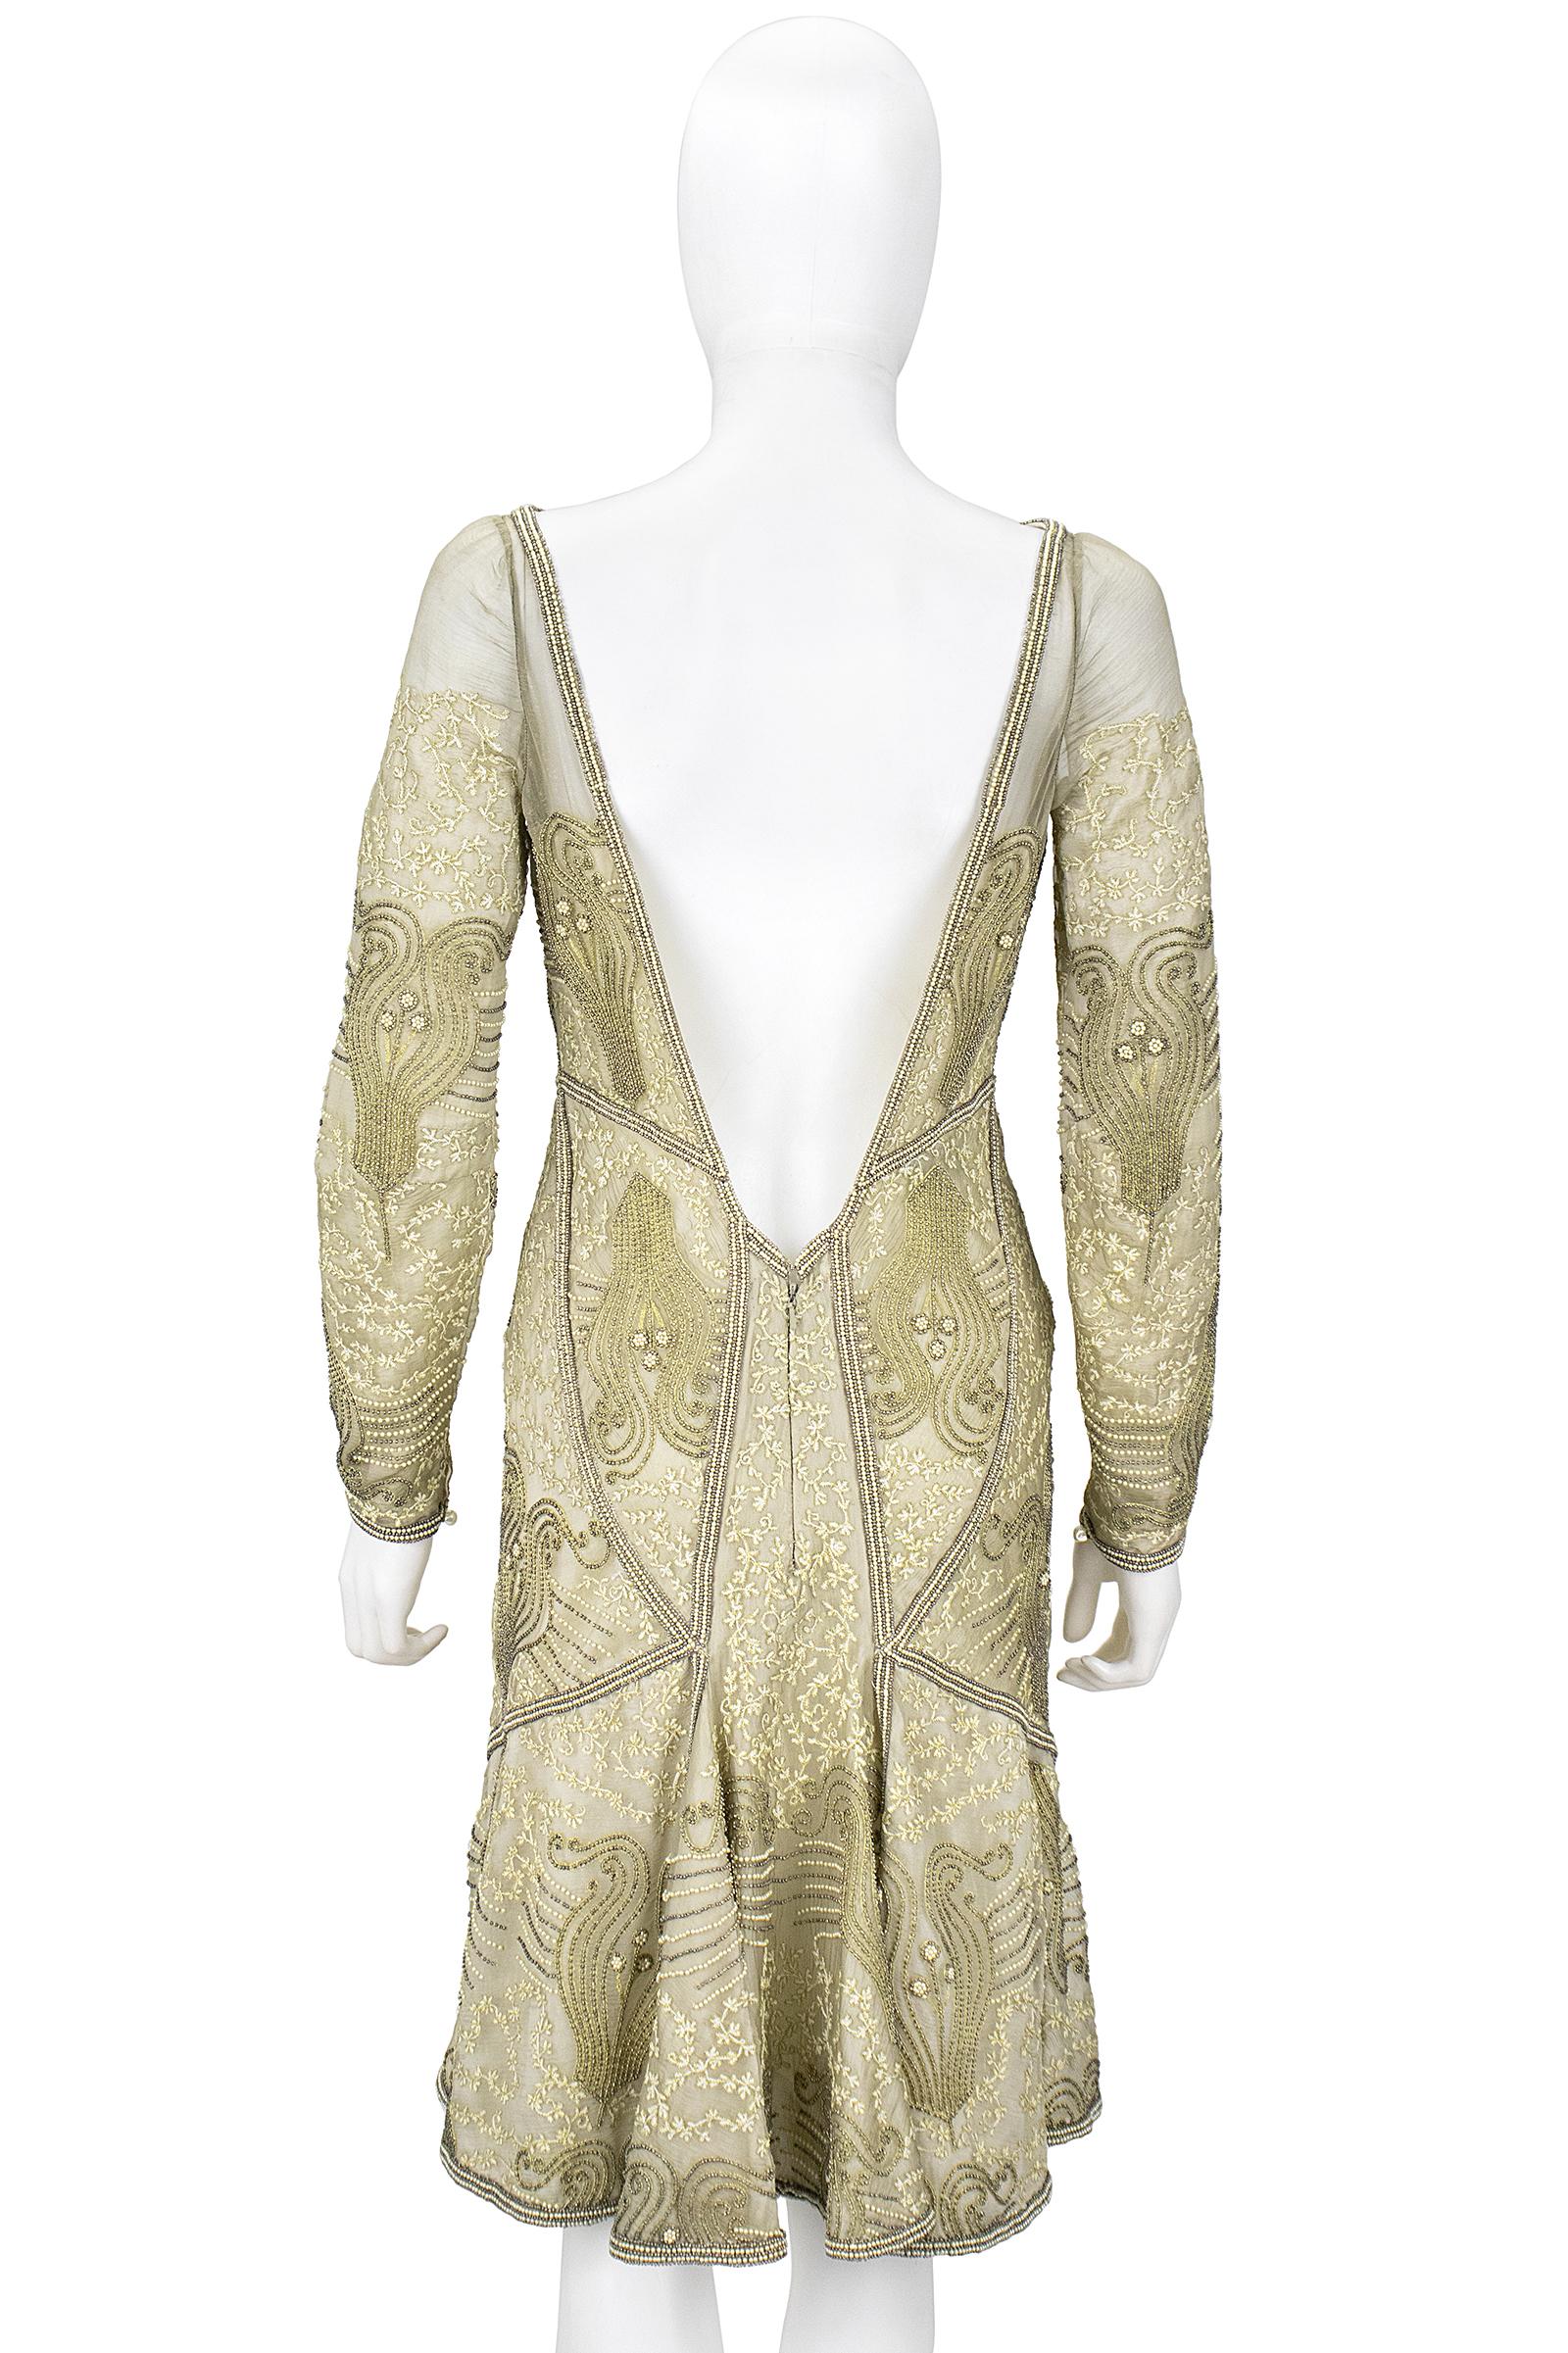 Eavis & Brown London Bronze Gold Beaded Silk Chiffon Cocktail Dress For Sale 1